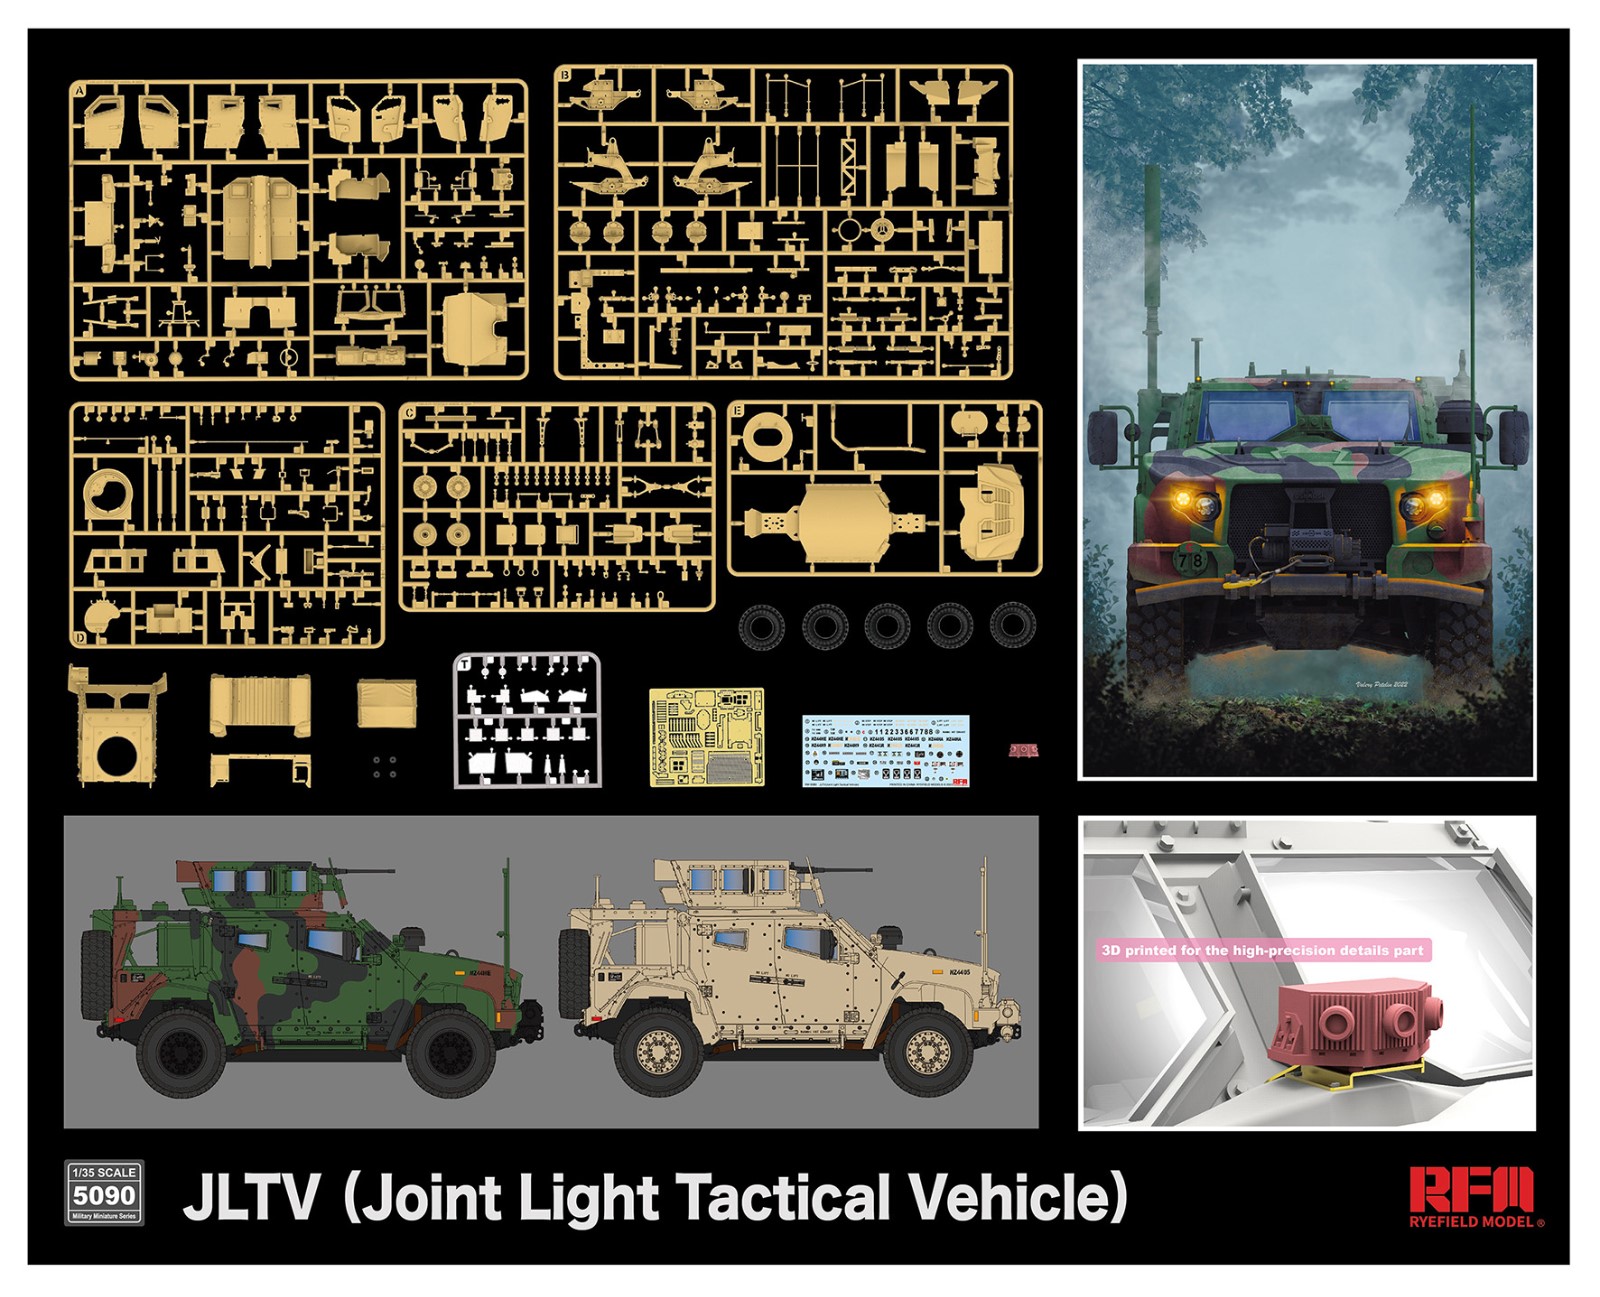 JLTV - Joint Light Tactical Vehicle - RM-5090